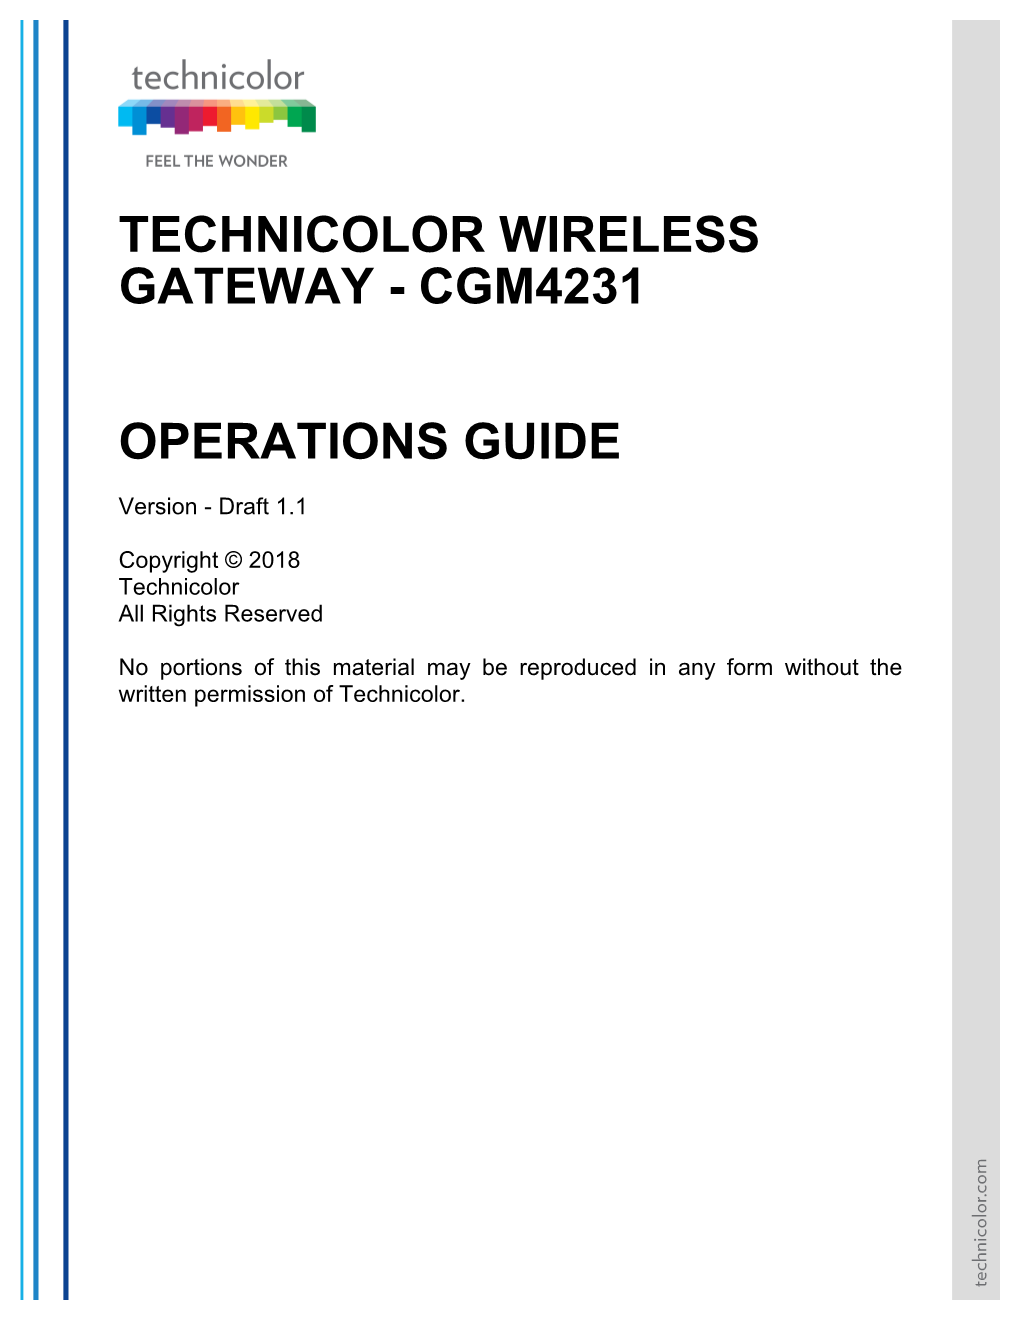 Technicolor Wireless Gateway - Cgm4231